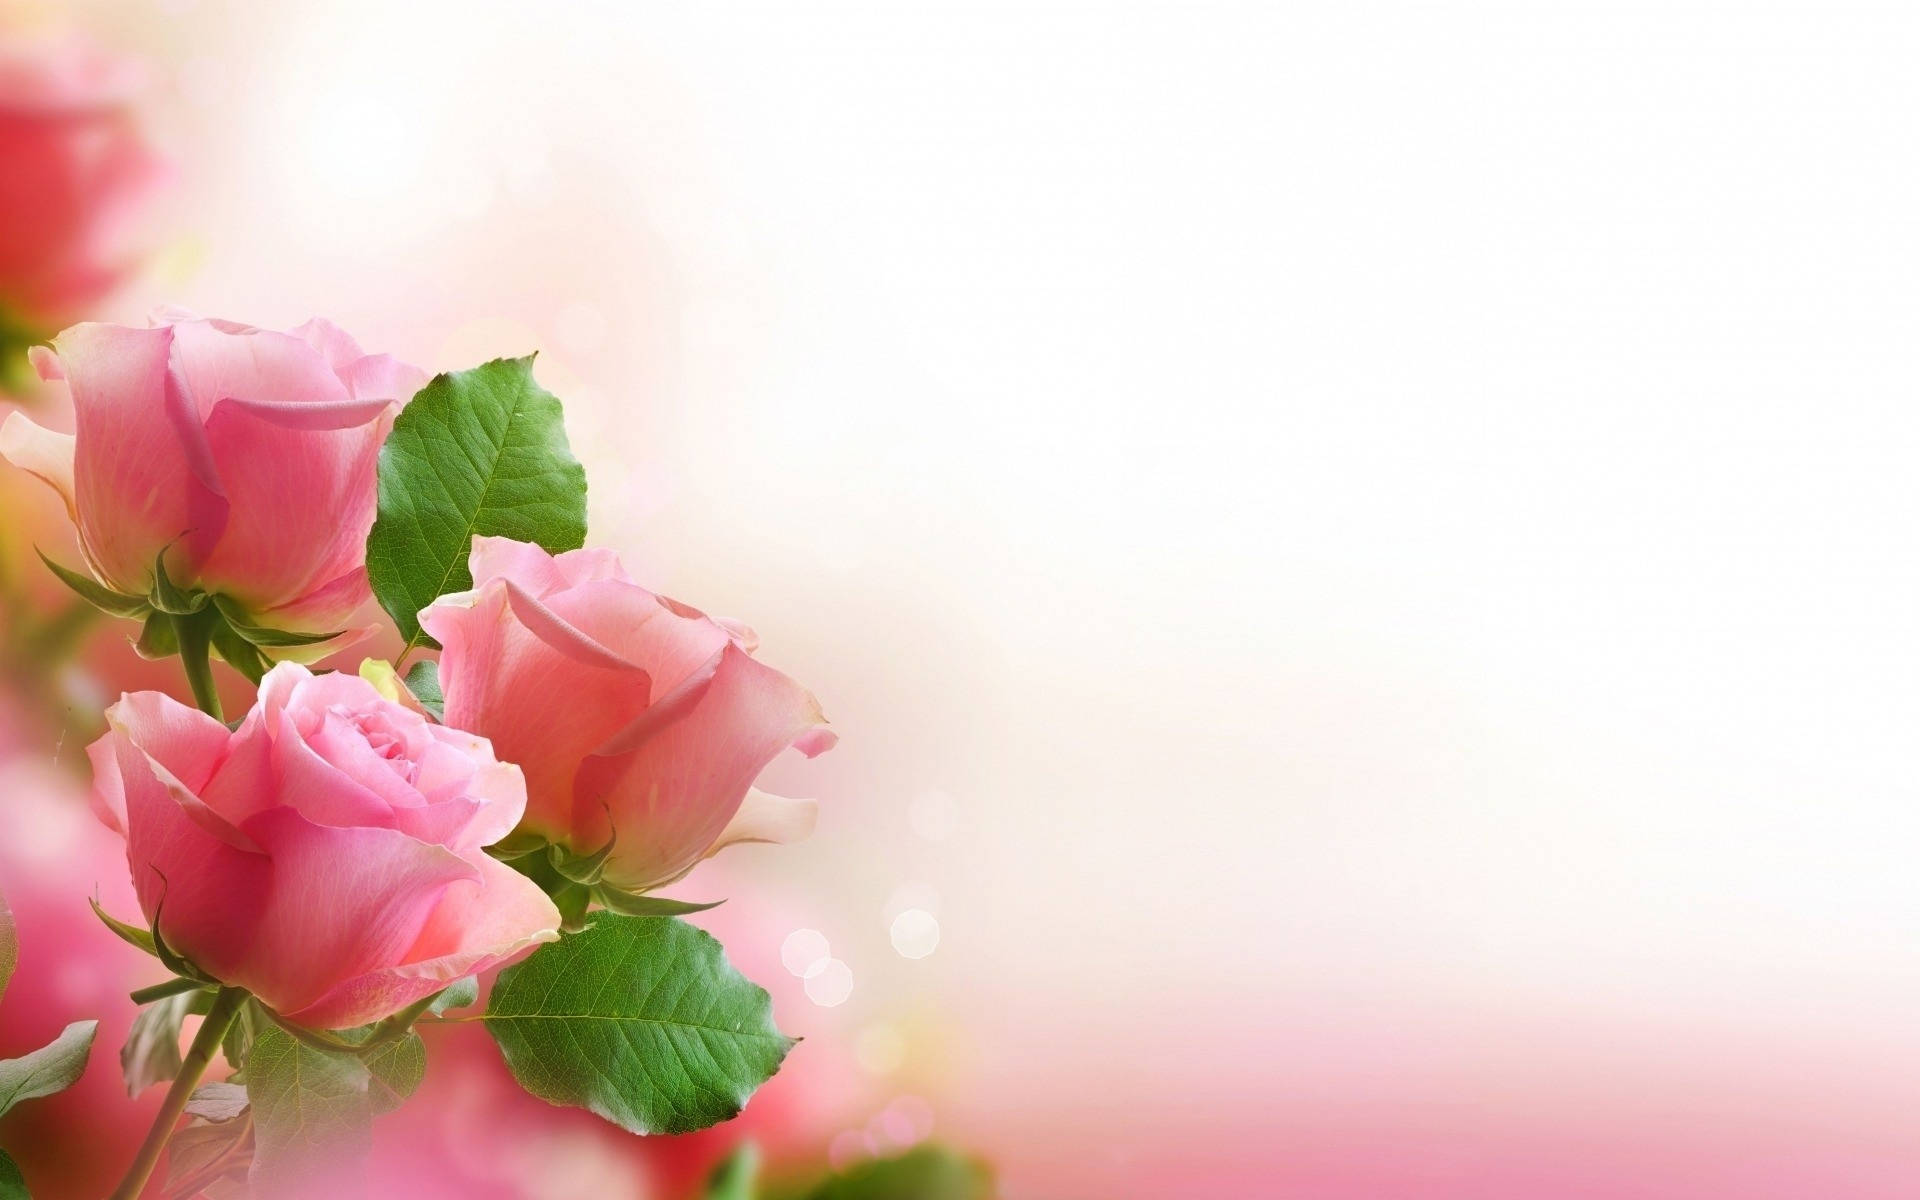 Flower Love Images  Download Free Pictures On Unsplash